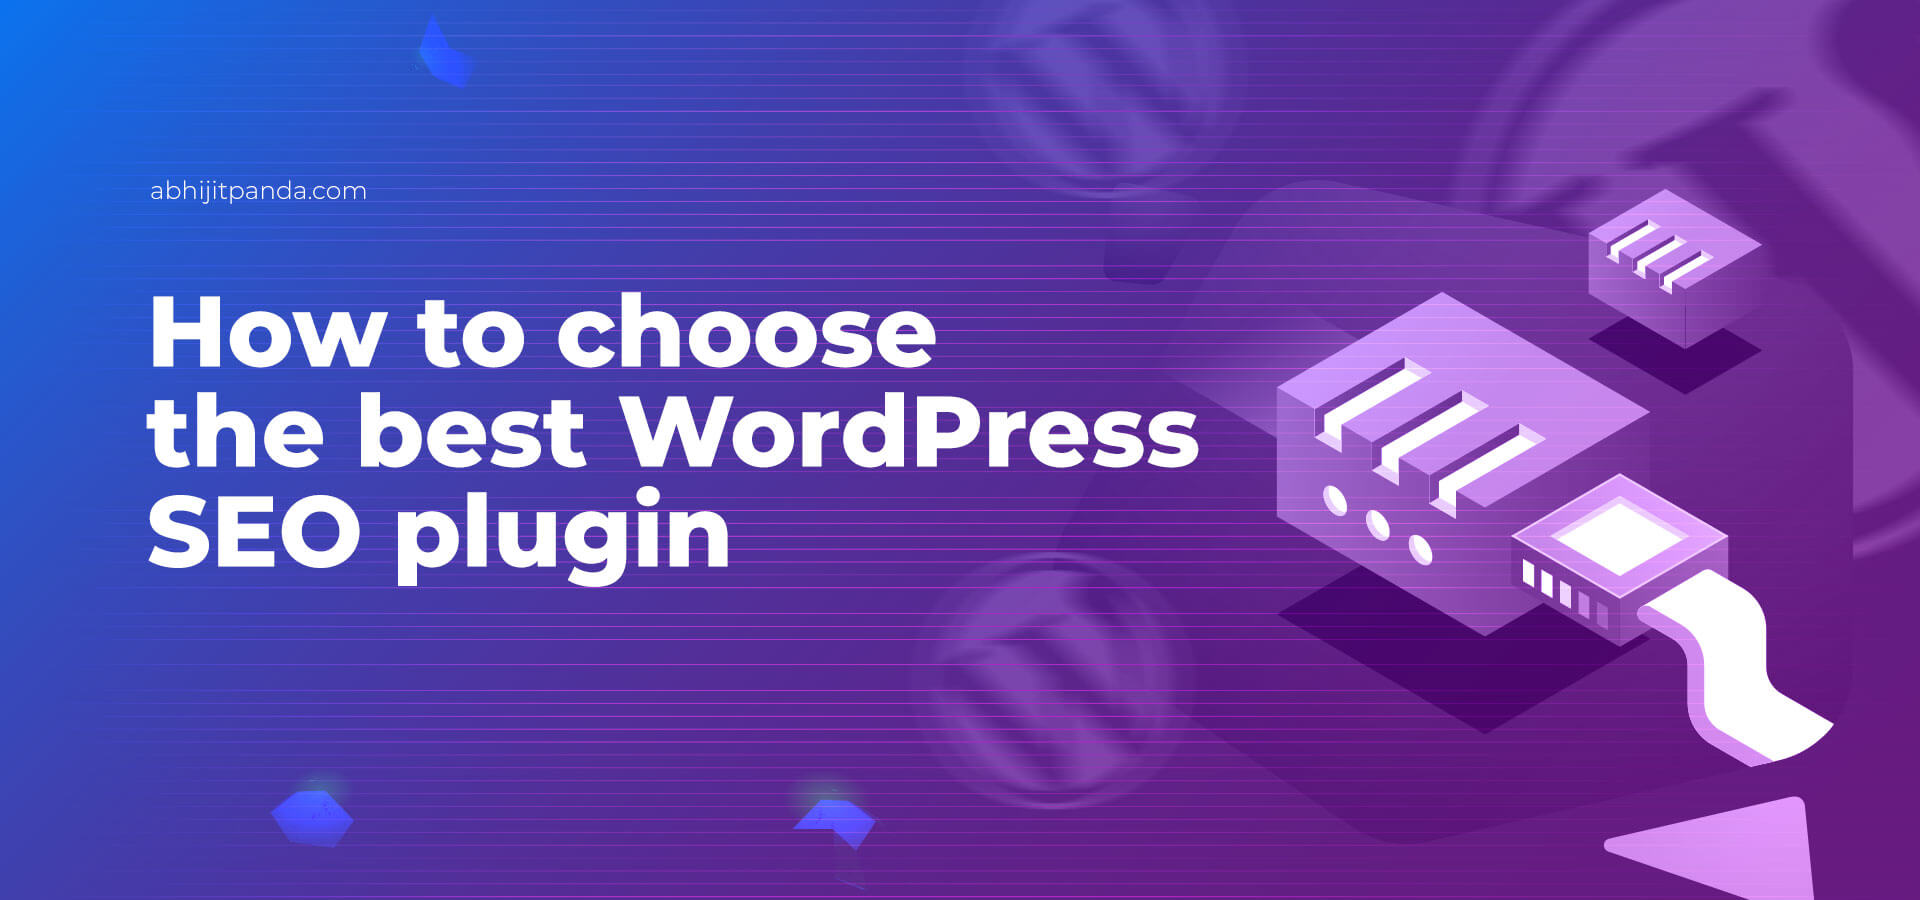 How to choose the best WordPress Plugin